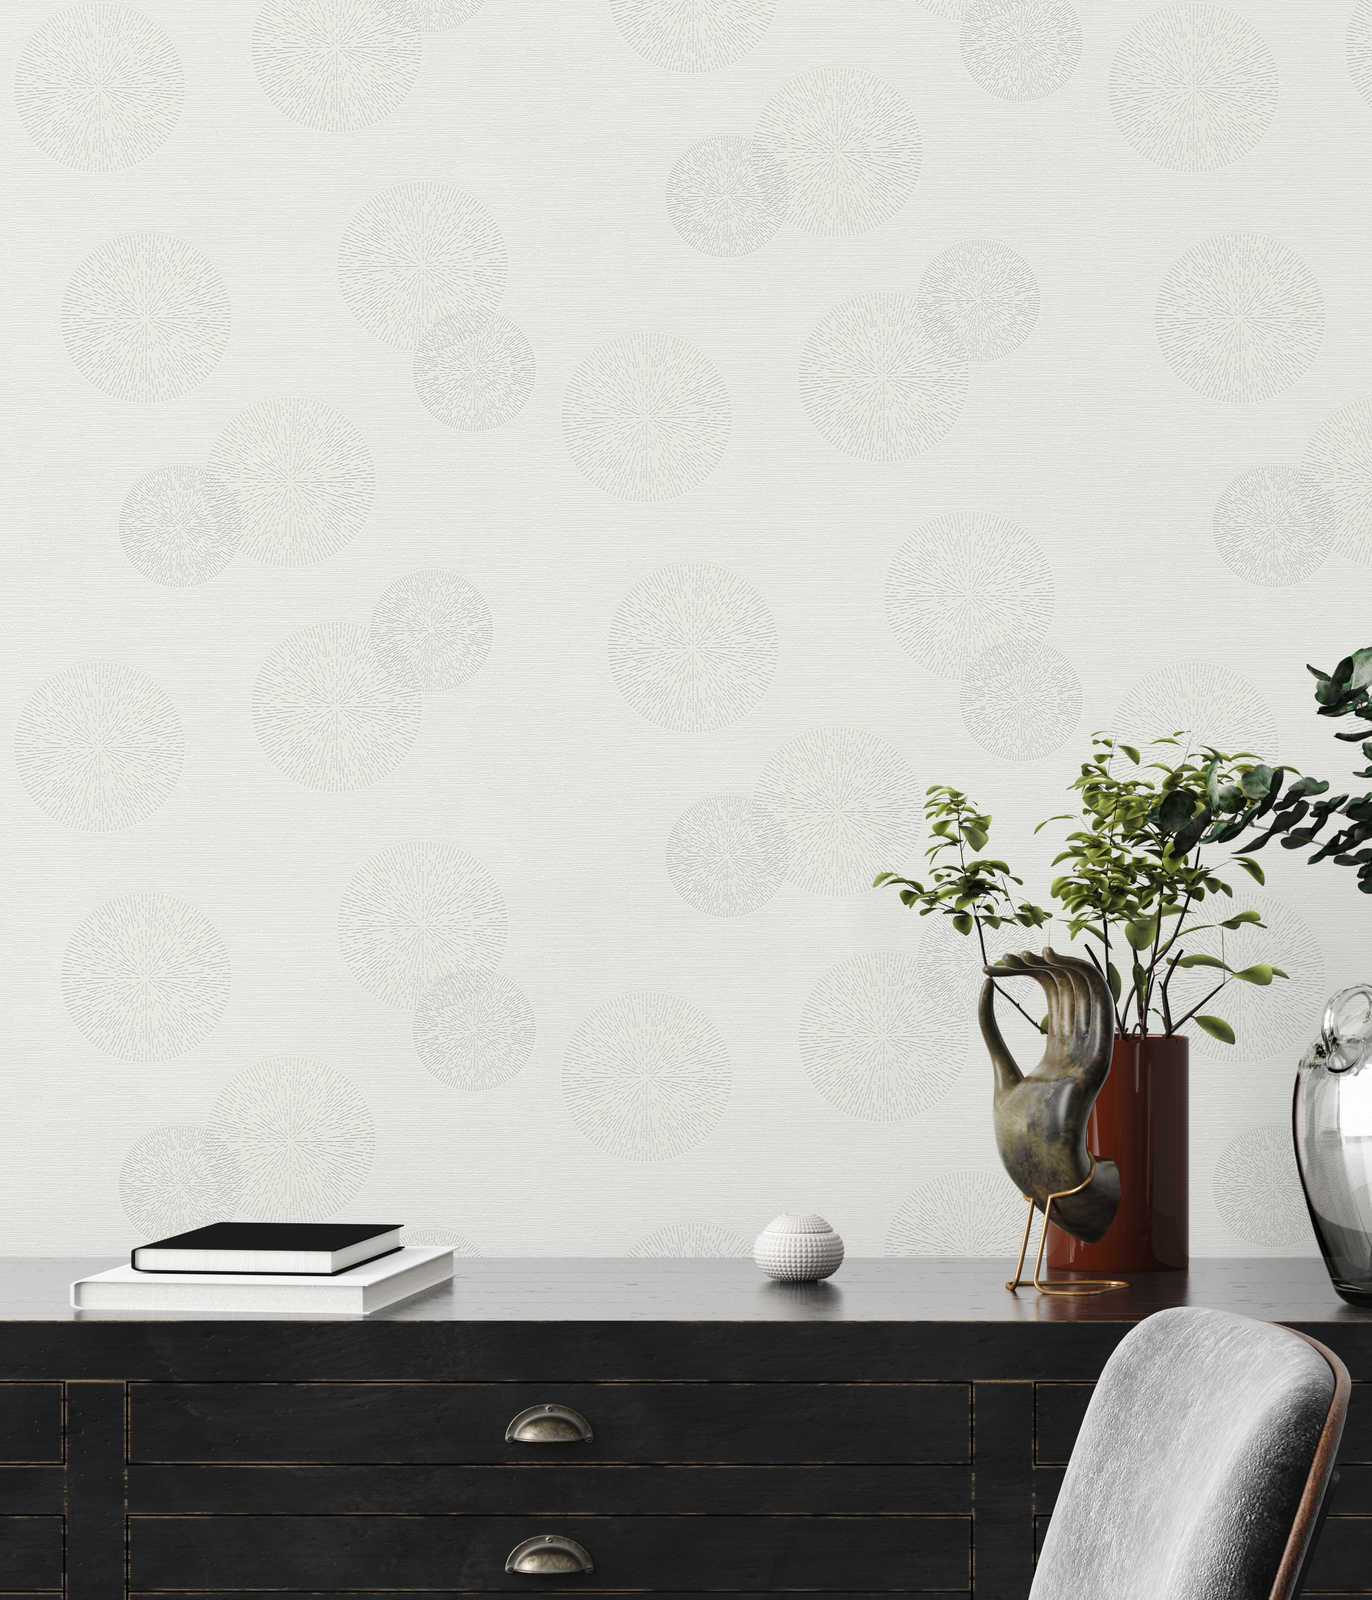             Textured wallpaper with modern circle pattern - white
        